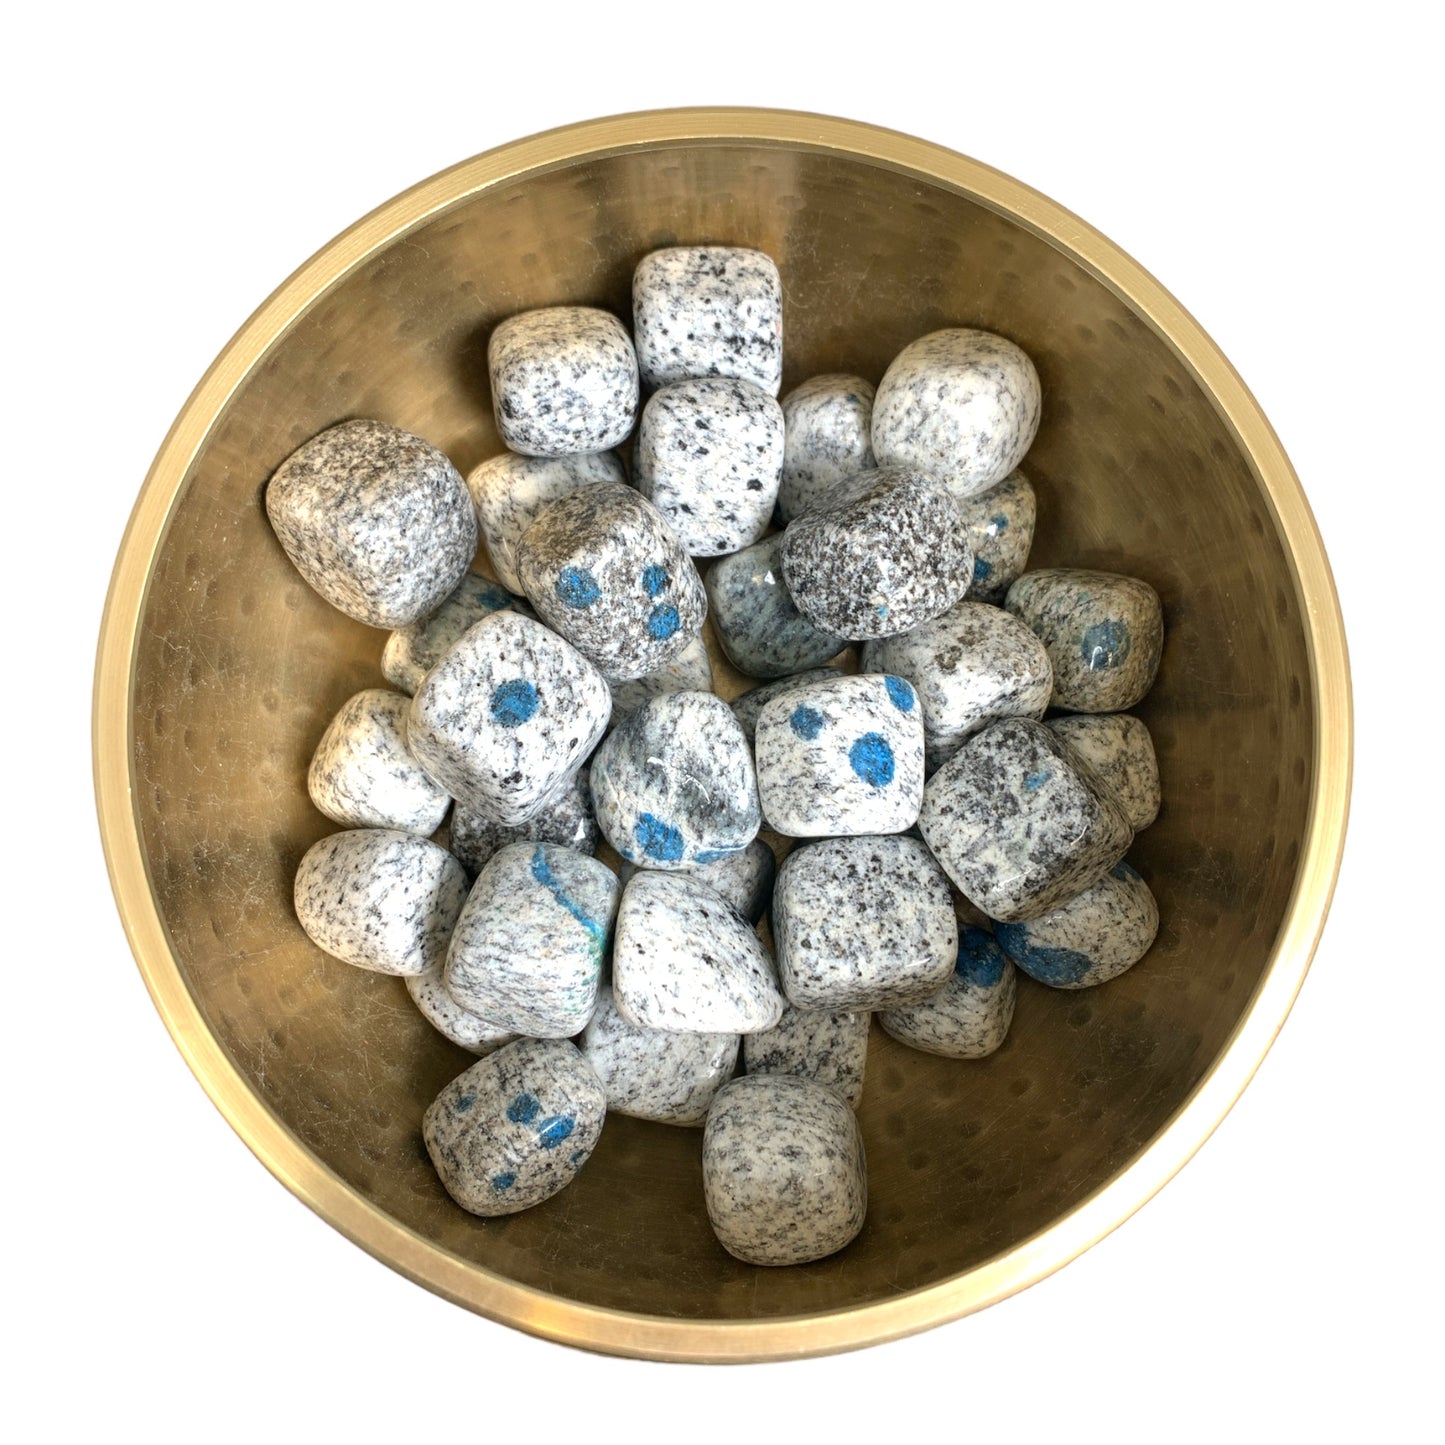 K2 Raindrop Azurite Tumble Stone - 20-30mm - Tumbled Stones - 500 Grams - India - NEW323